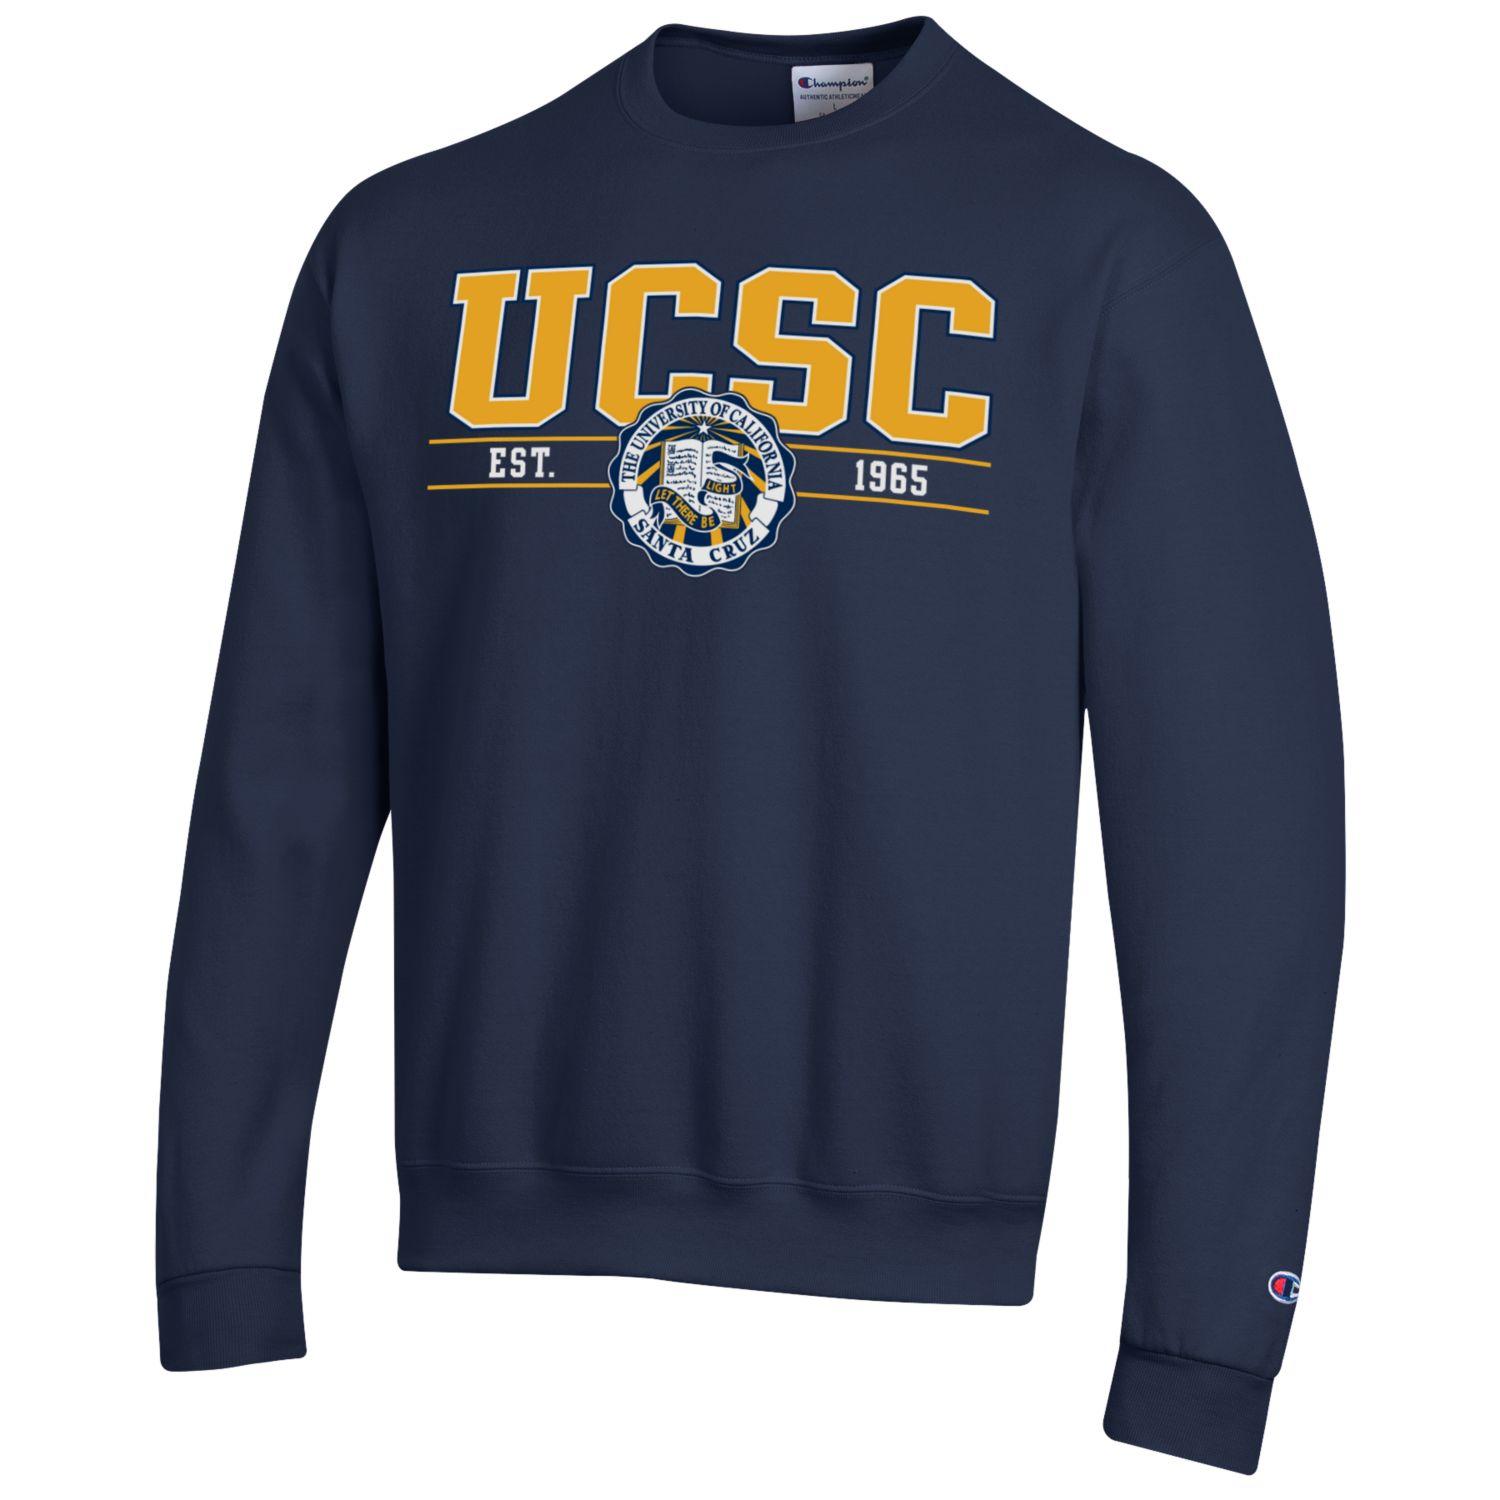 U.C. Santa Cruz lines and seal crew-neck sweatshirt-Navy-Shop College Wear